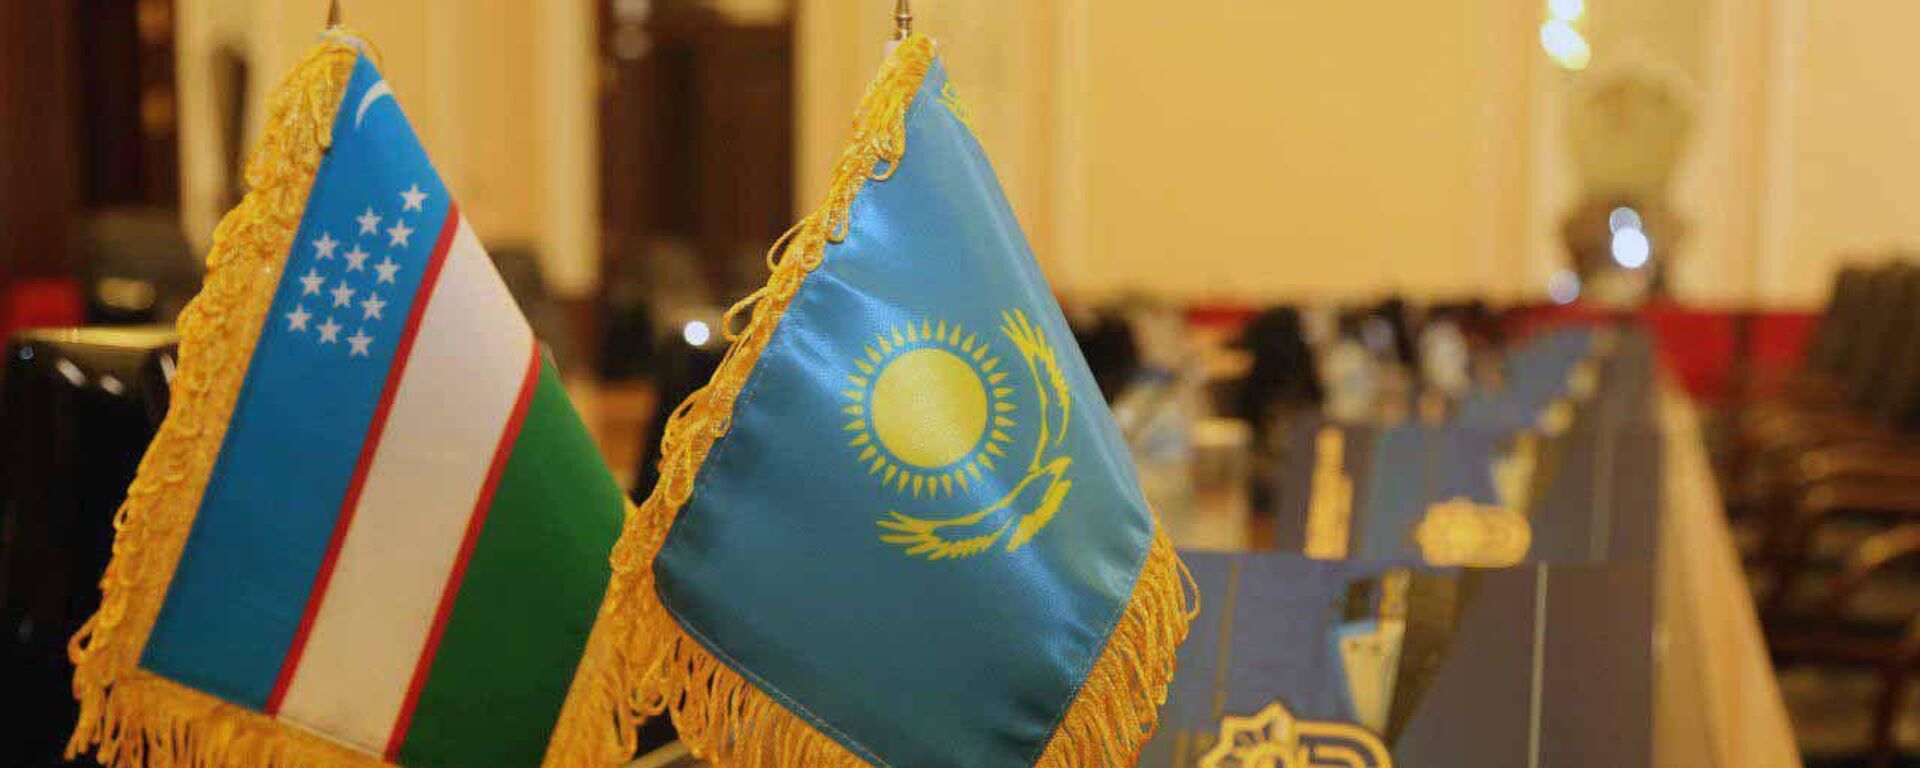 Kazaxstan i Uzbekistan obsudili vzaimodeystvie v jeleznodorojnoy sfere - Sputnik O‘zbekiston, 1920, 28.07.2021